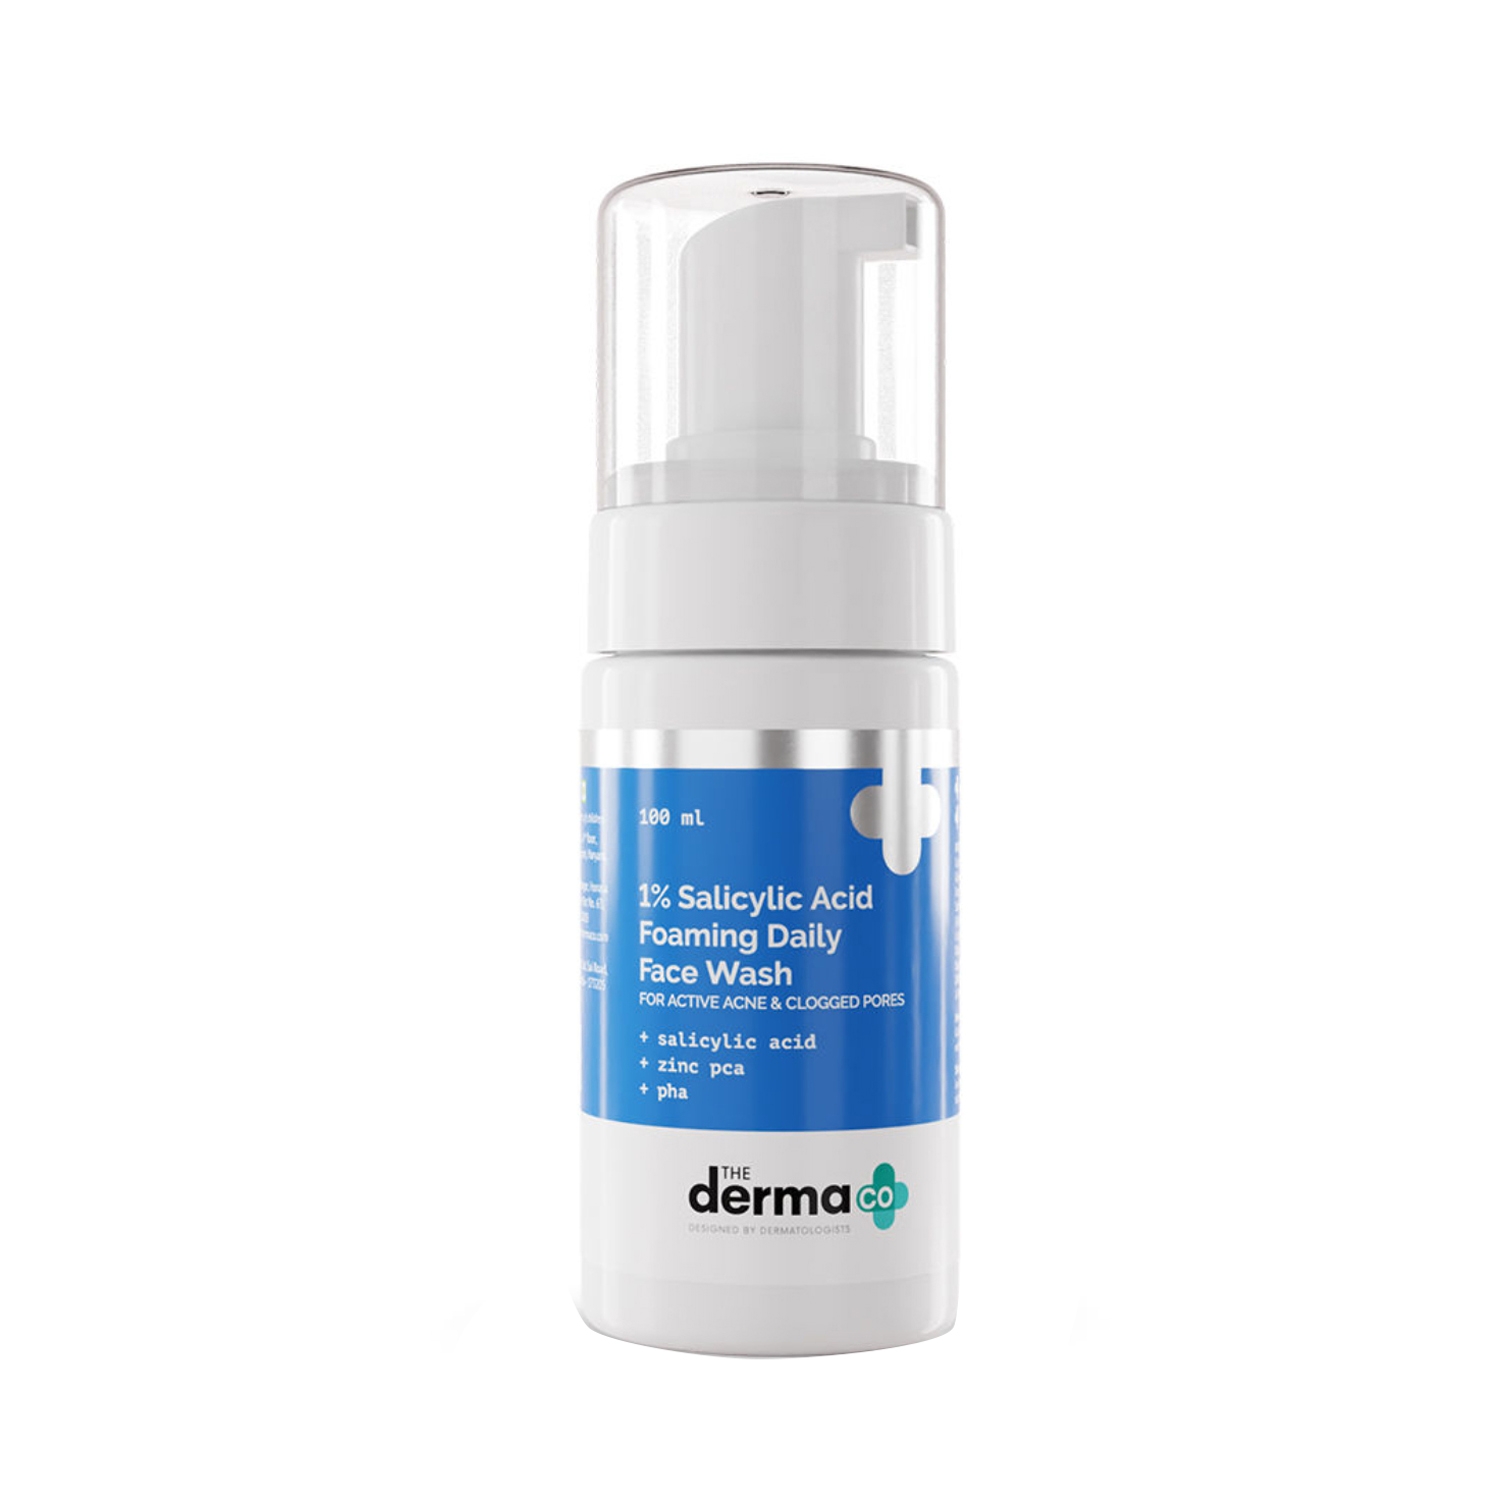 The Derma Co | The Derma Co 1% Salicylic Acid Foaming Daily Face Wash (100ml)